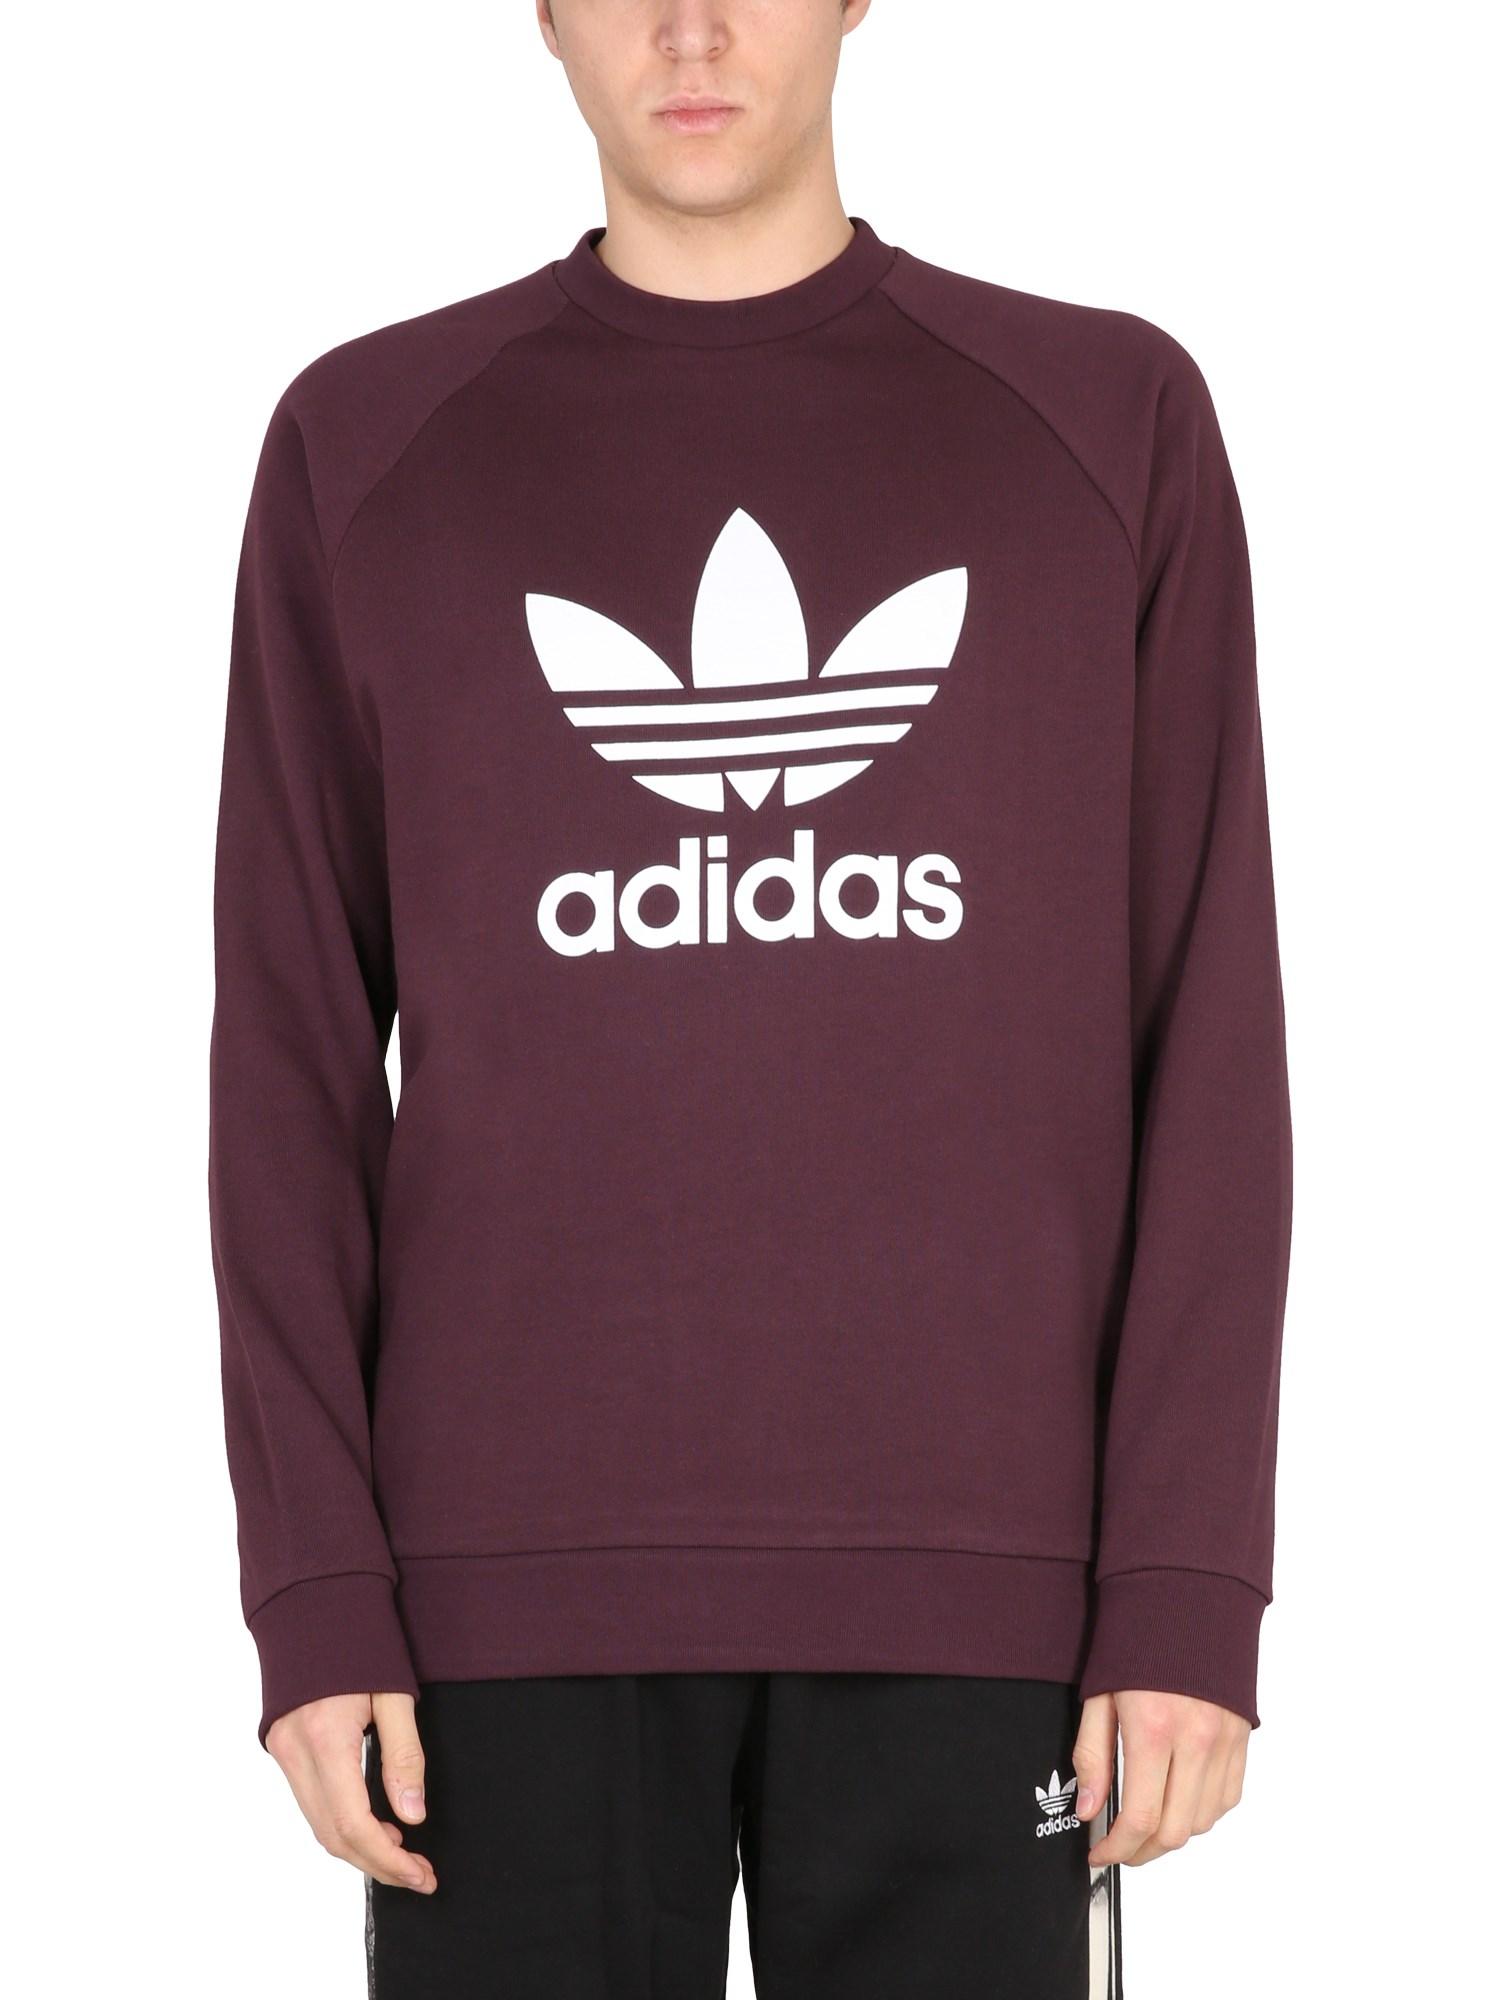 adidas Originals Crewneck Sweatshirt in Purple for Men | Lyst